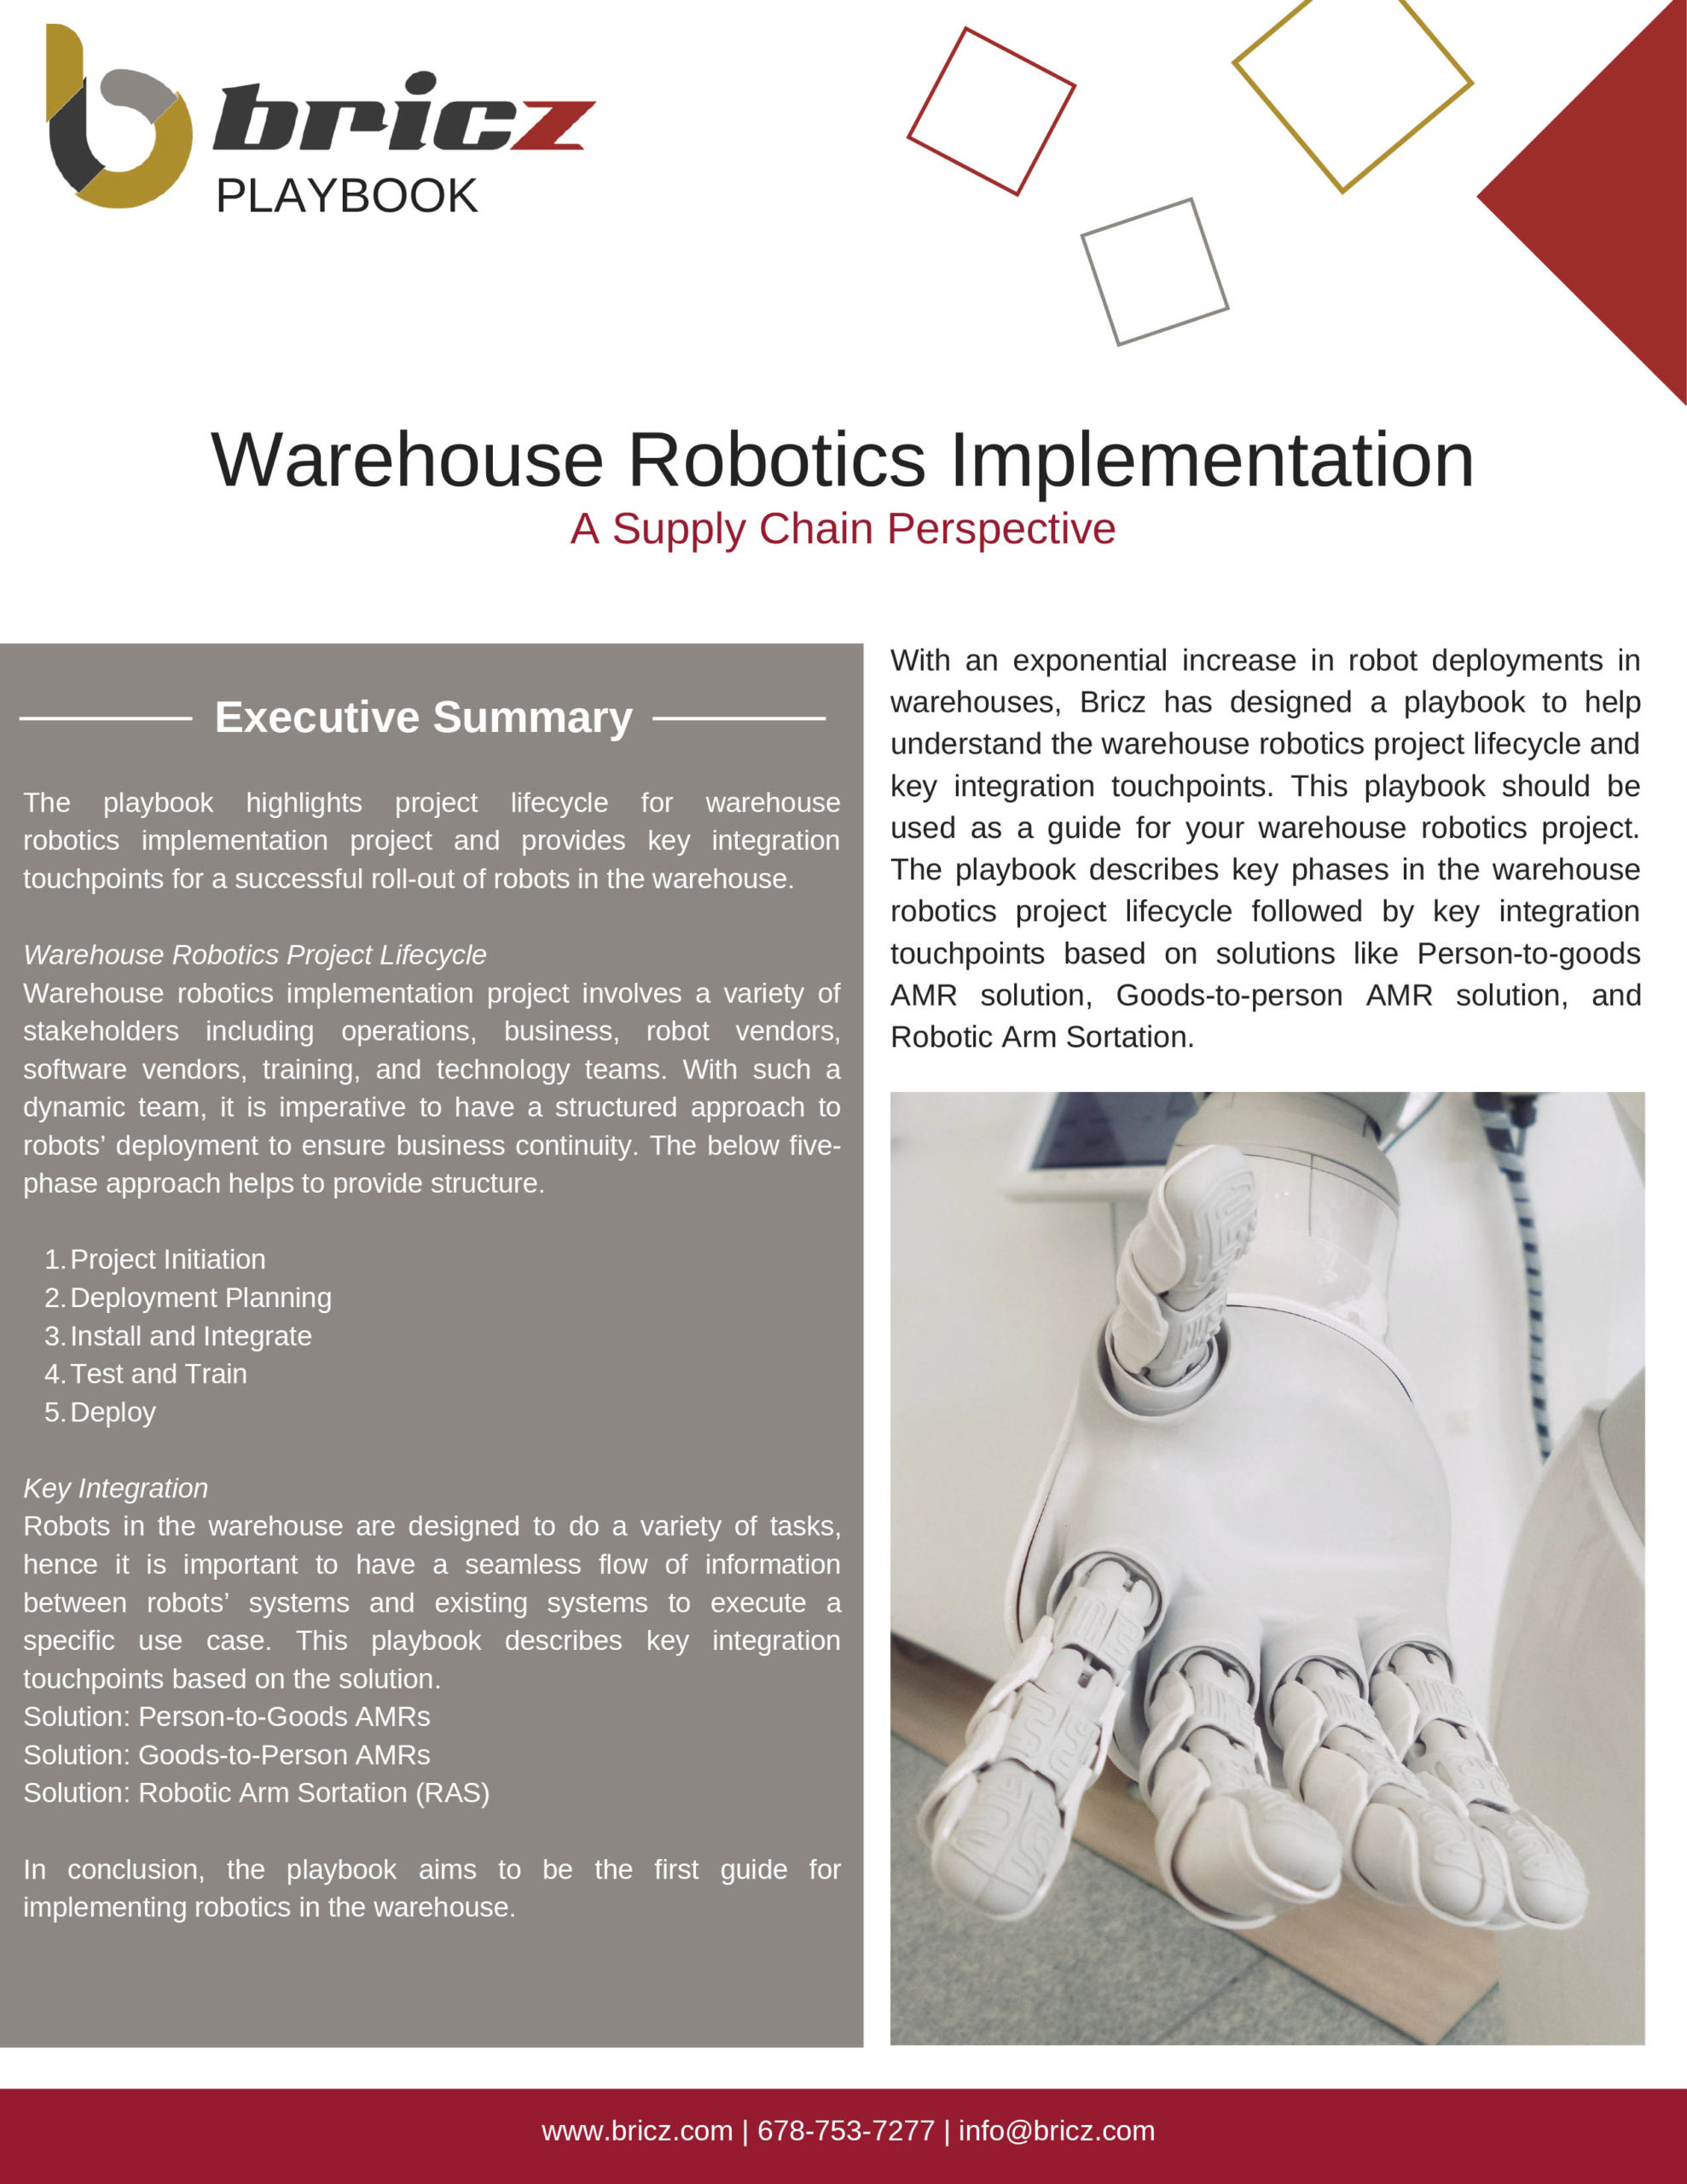 Warehouse Robotics Implementation Playbook